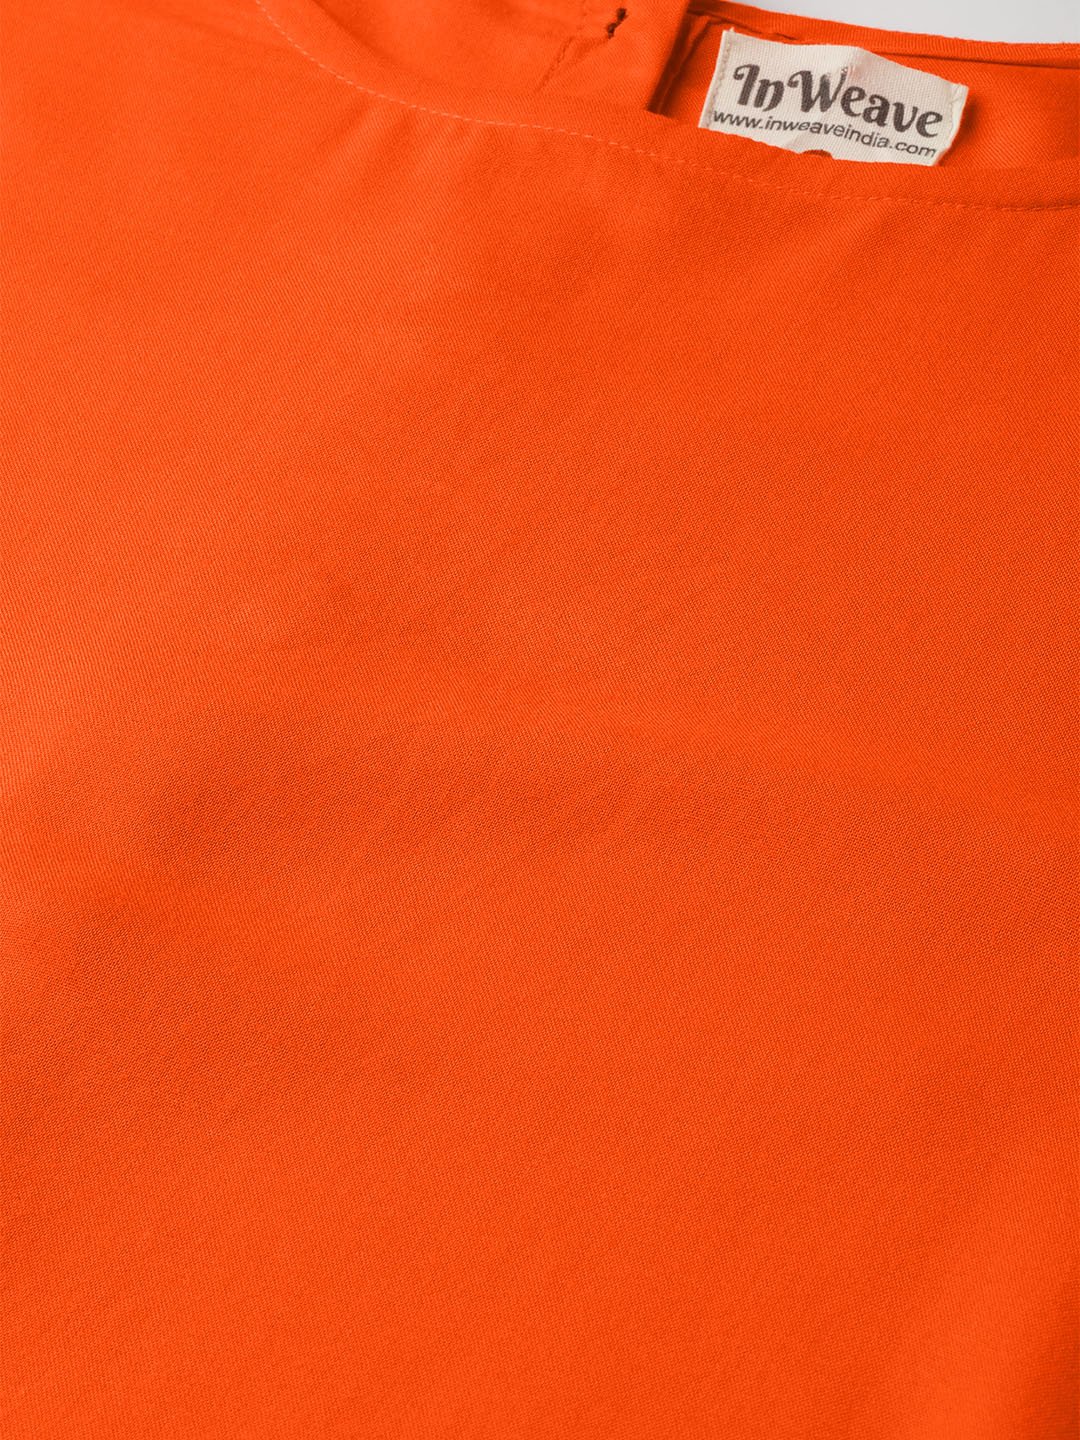 Orange Top With  White Stole